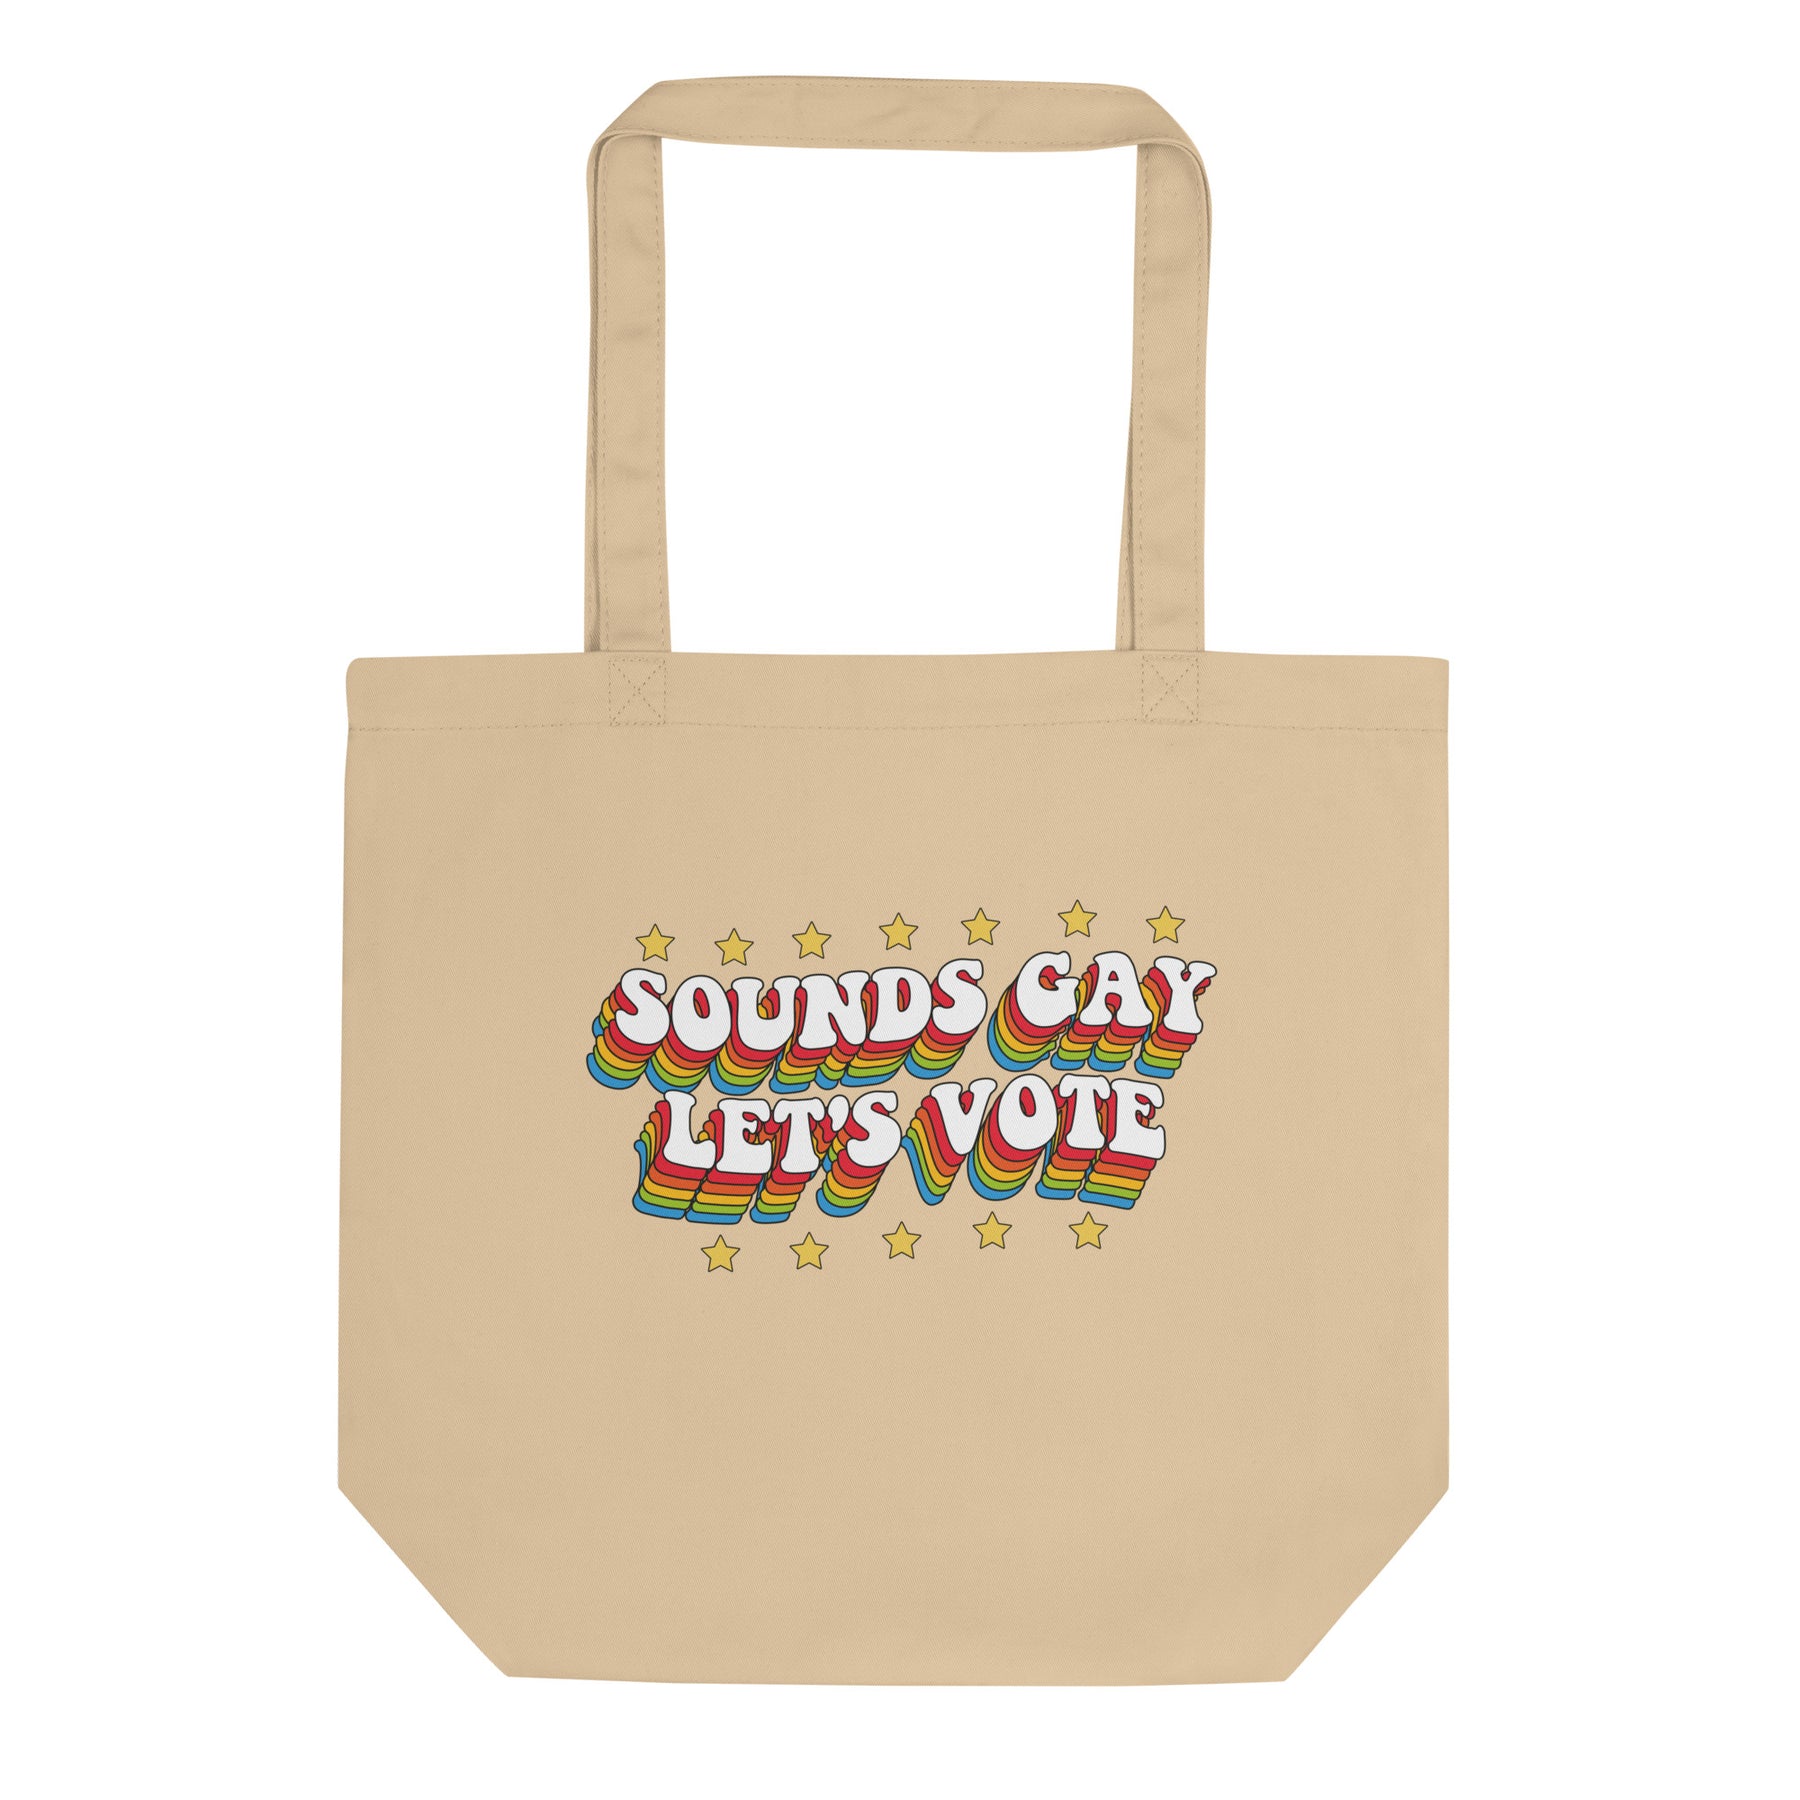 Sounds Gay Let's Vote Eco Tote Bag